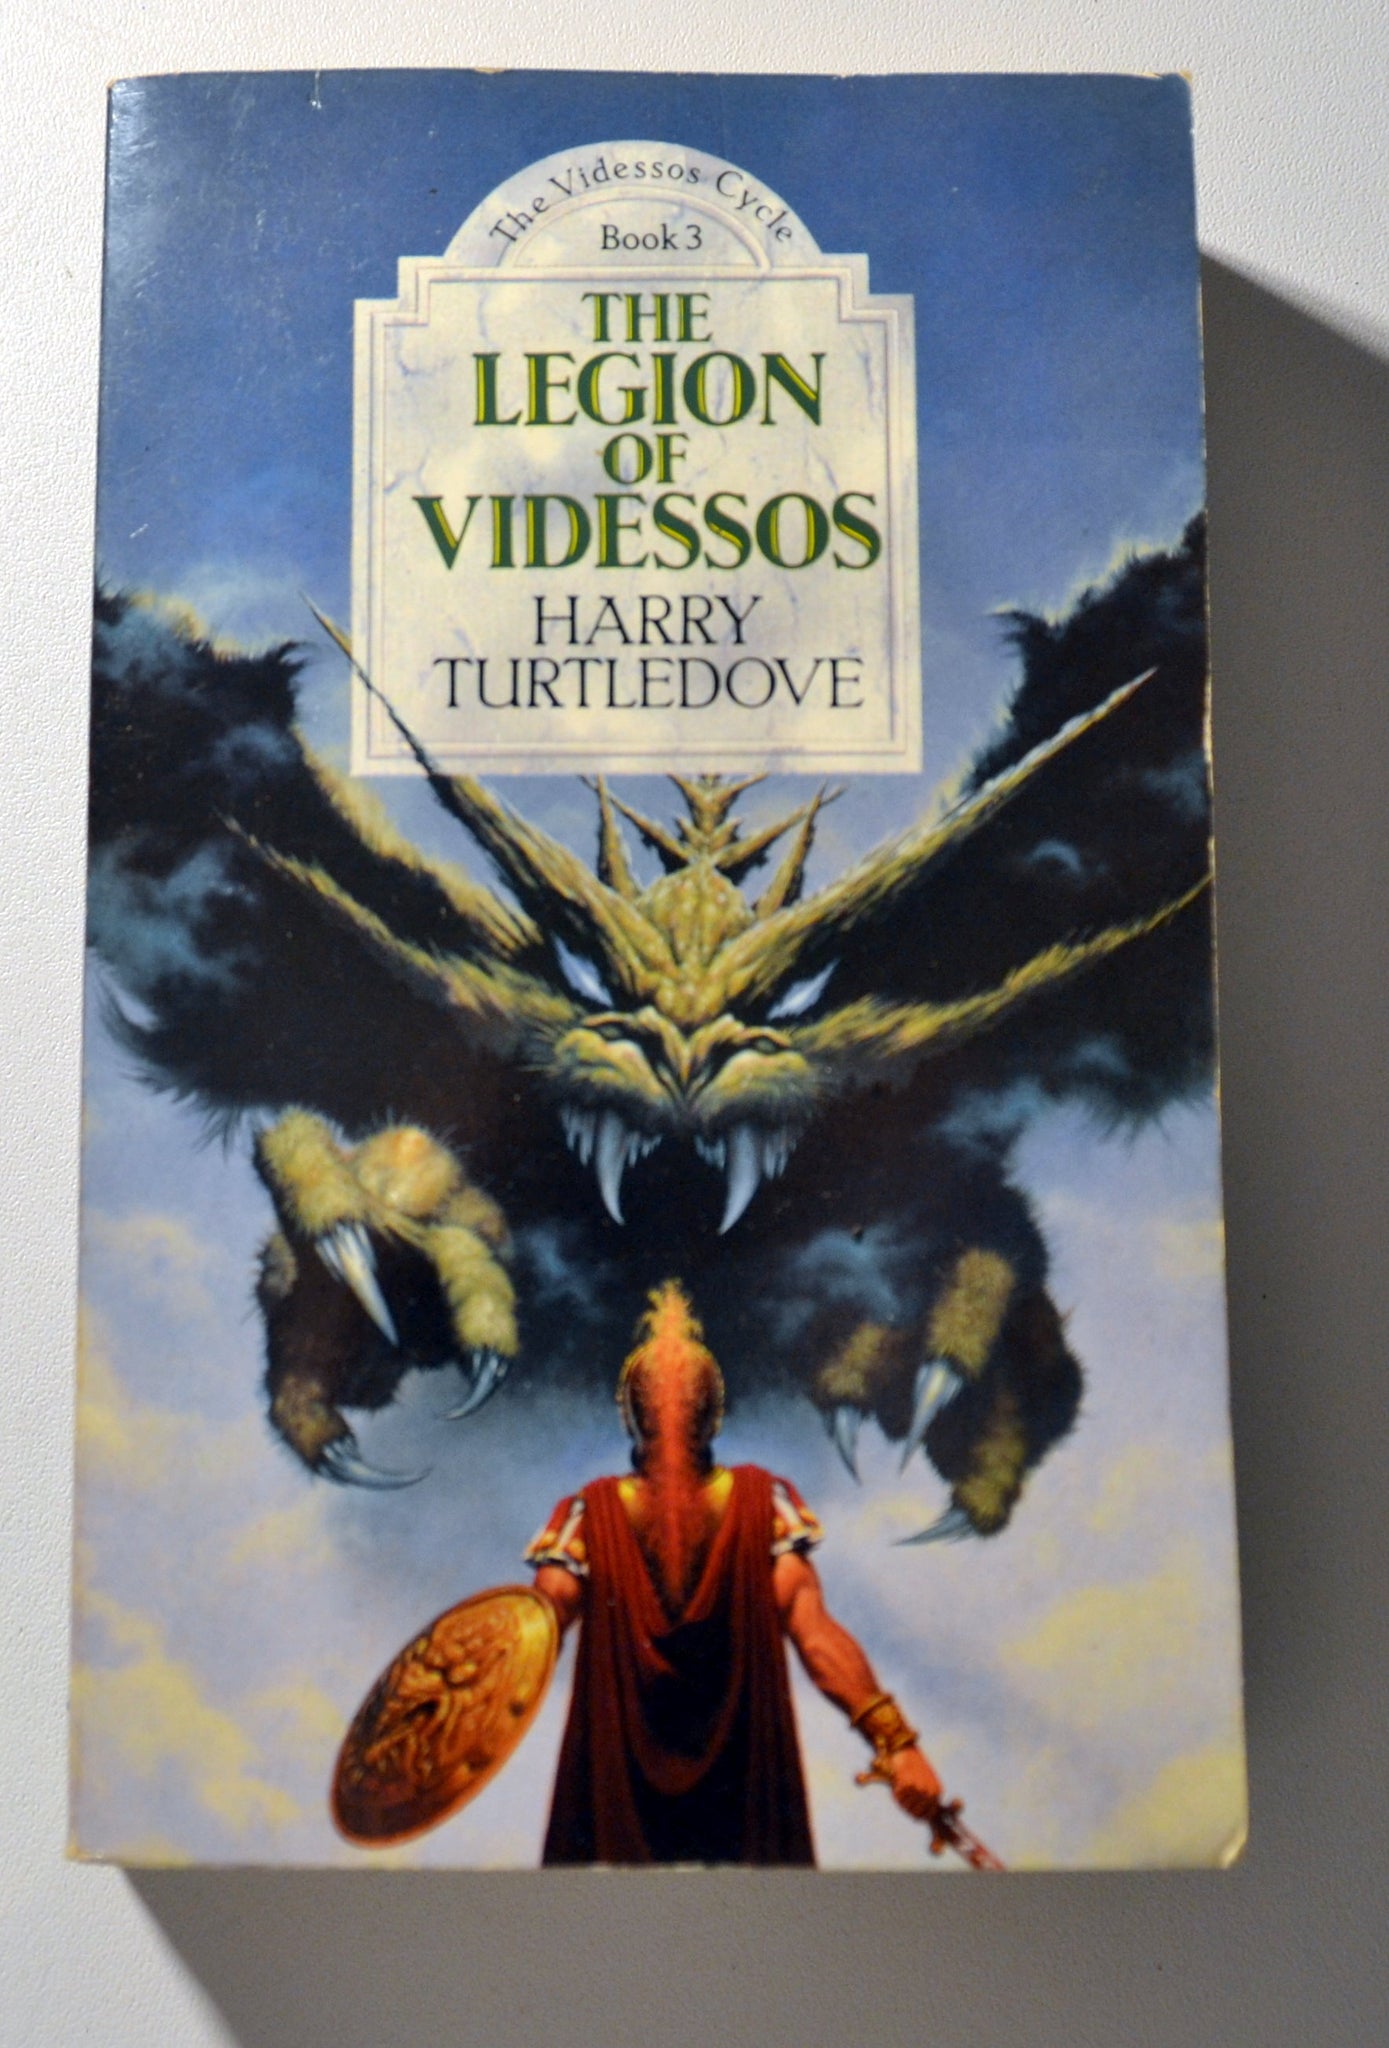 The Legion of Videssos - The Videssos Cycle Book 3